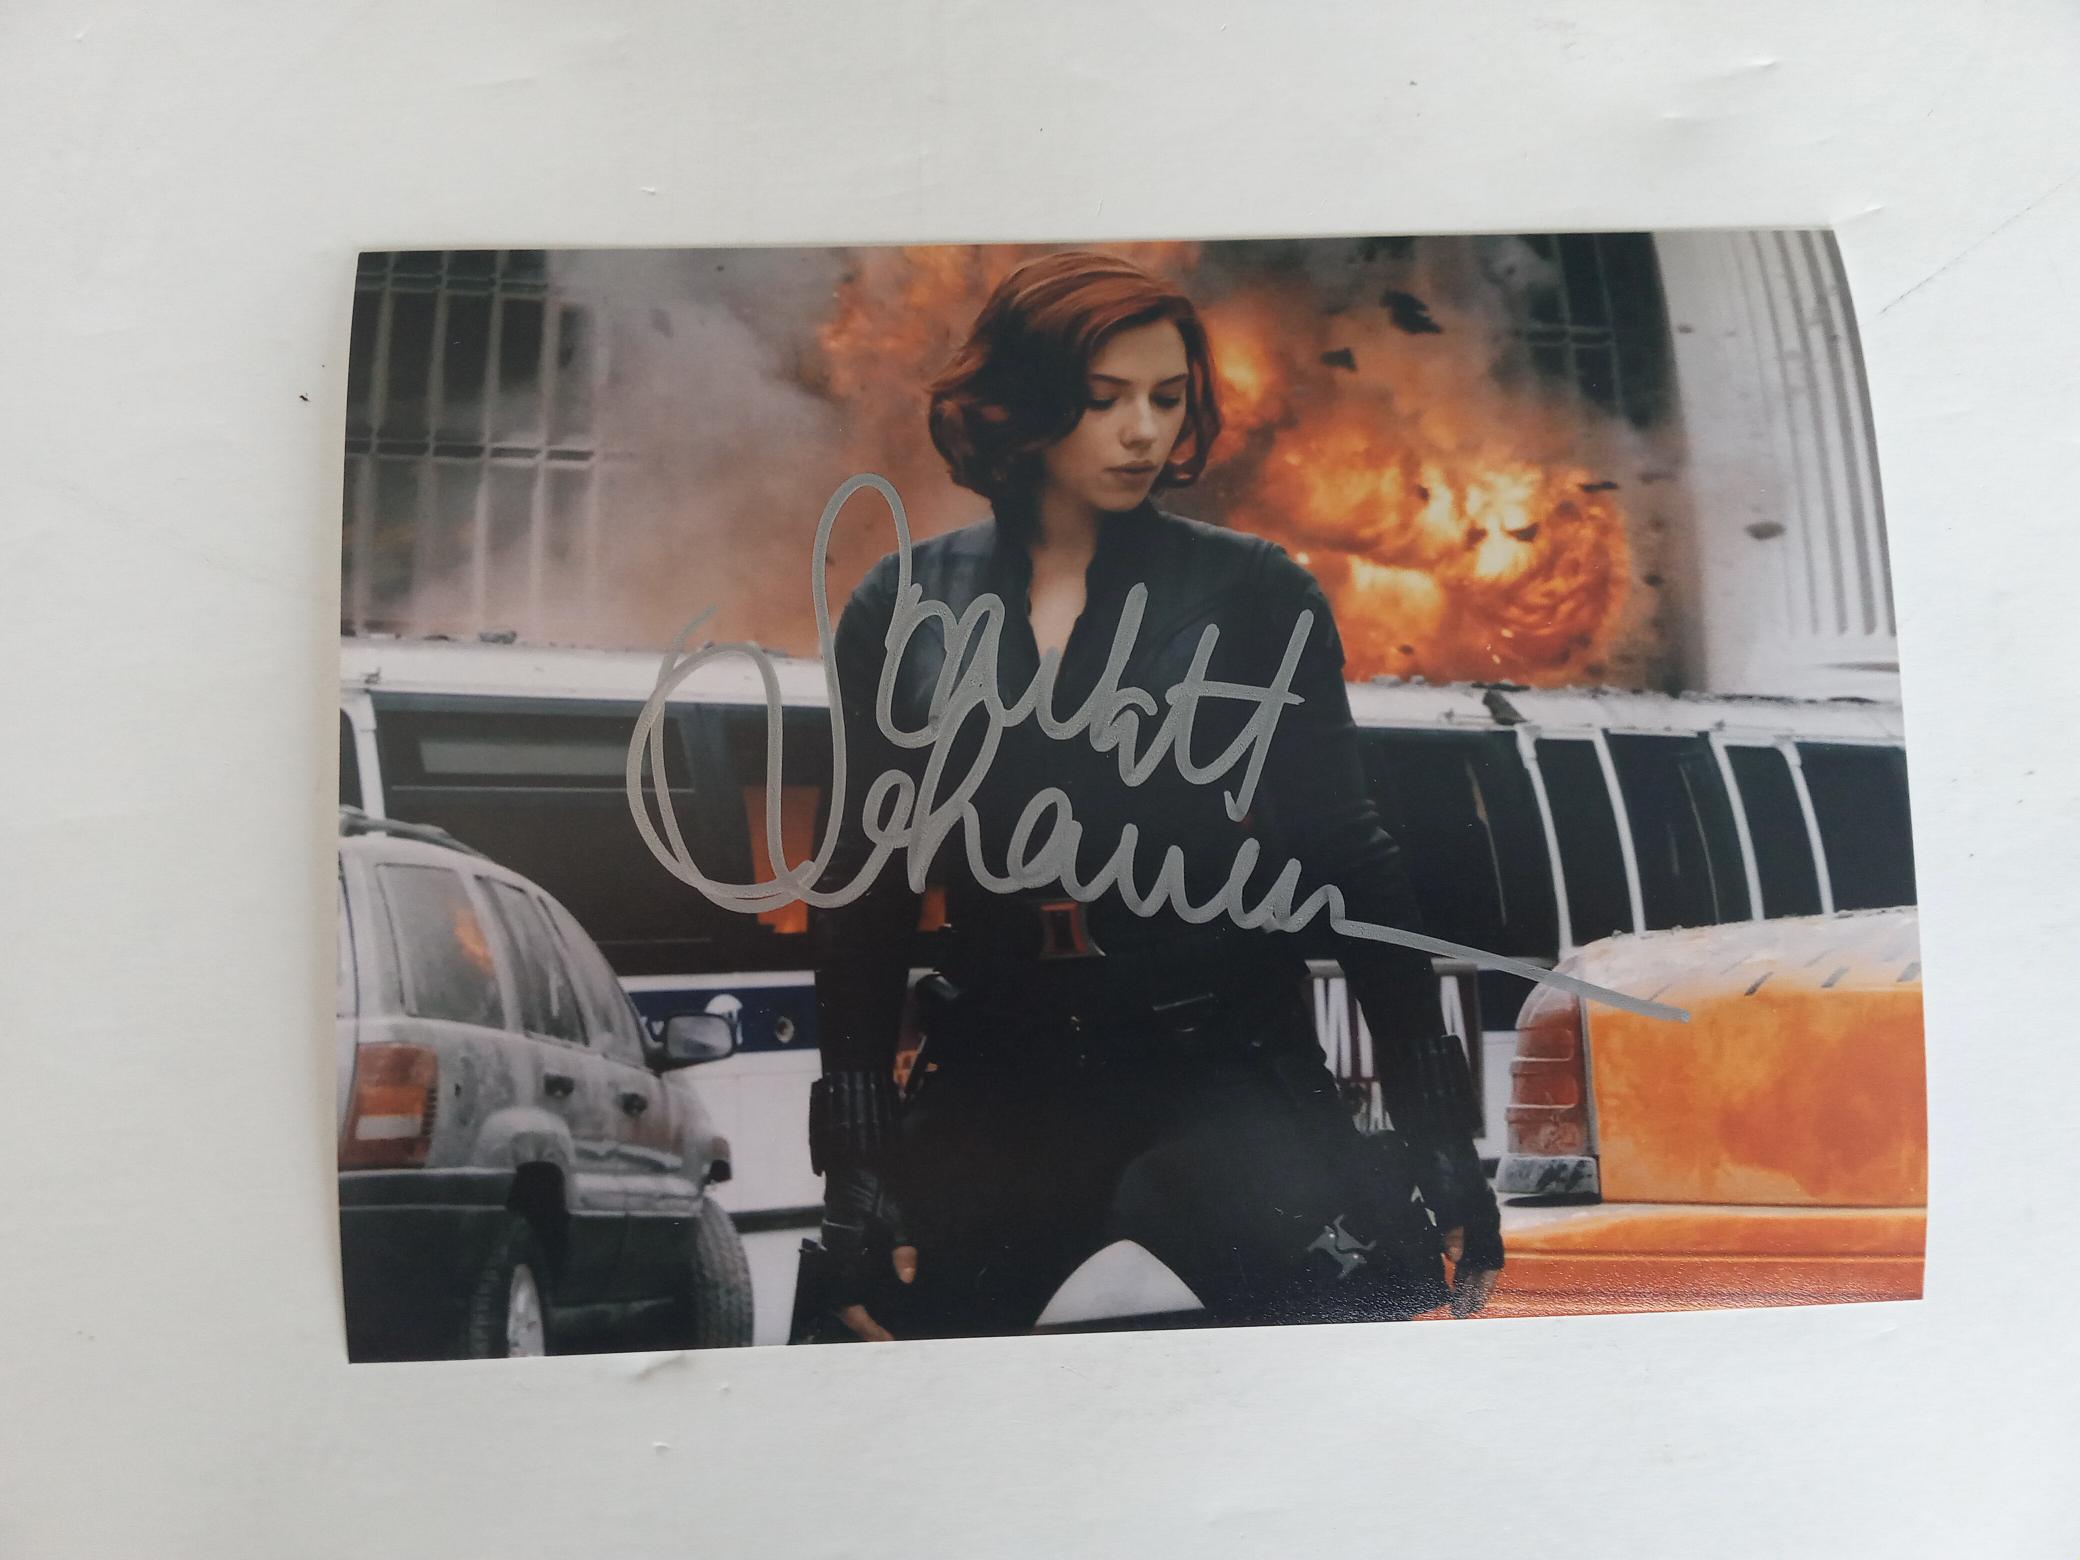 Scarlett Johansson the Black Widow Natasha Romanoff 5 x 7 photo signed with proof